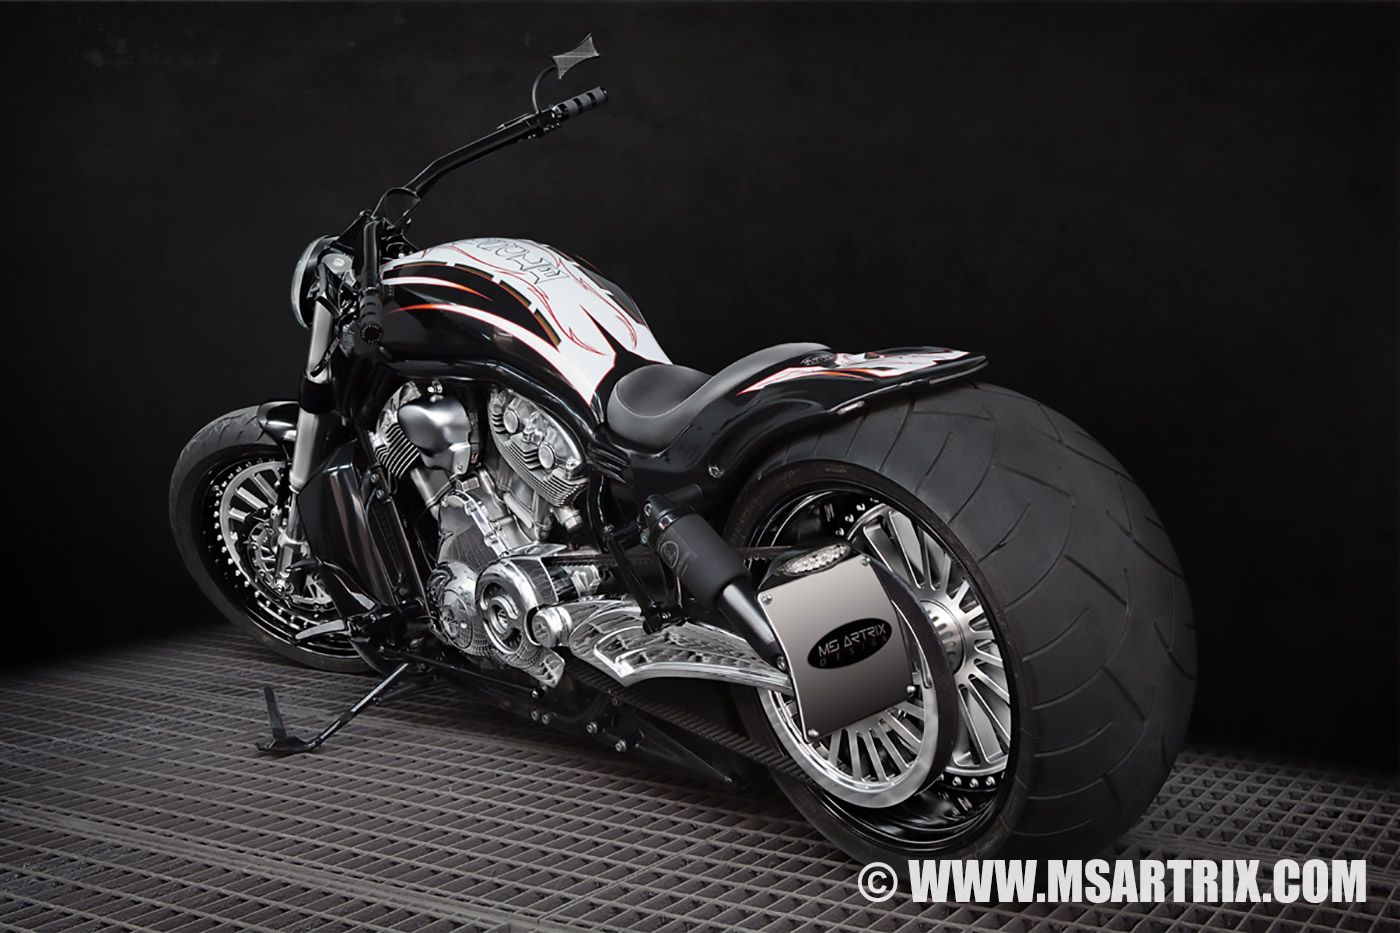 Harley-Davidson V-Rod “Descrizione” by MS Artrix